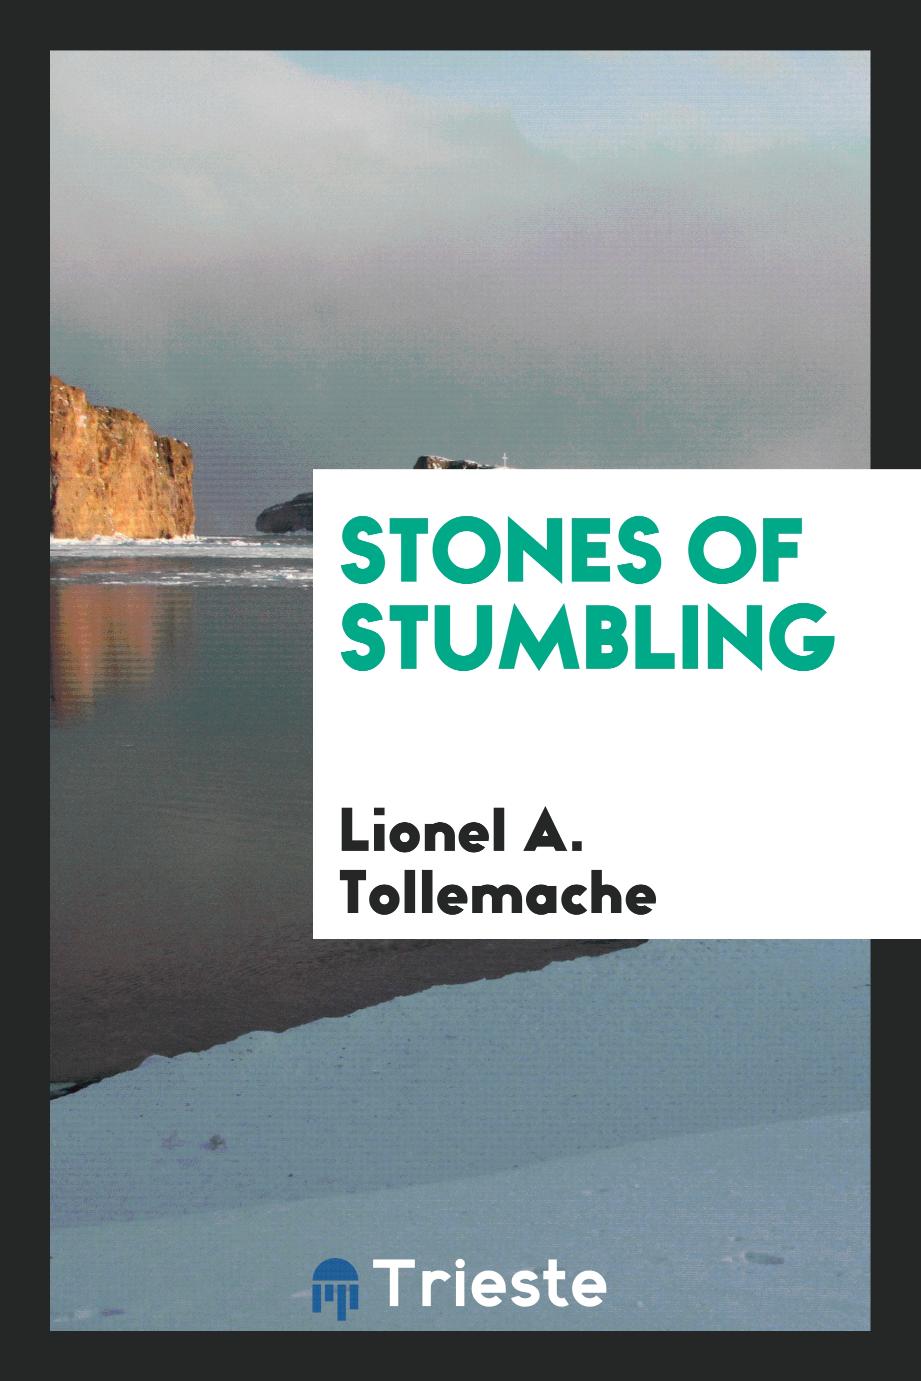 Stones of stumbling